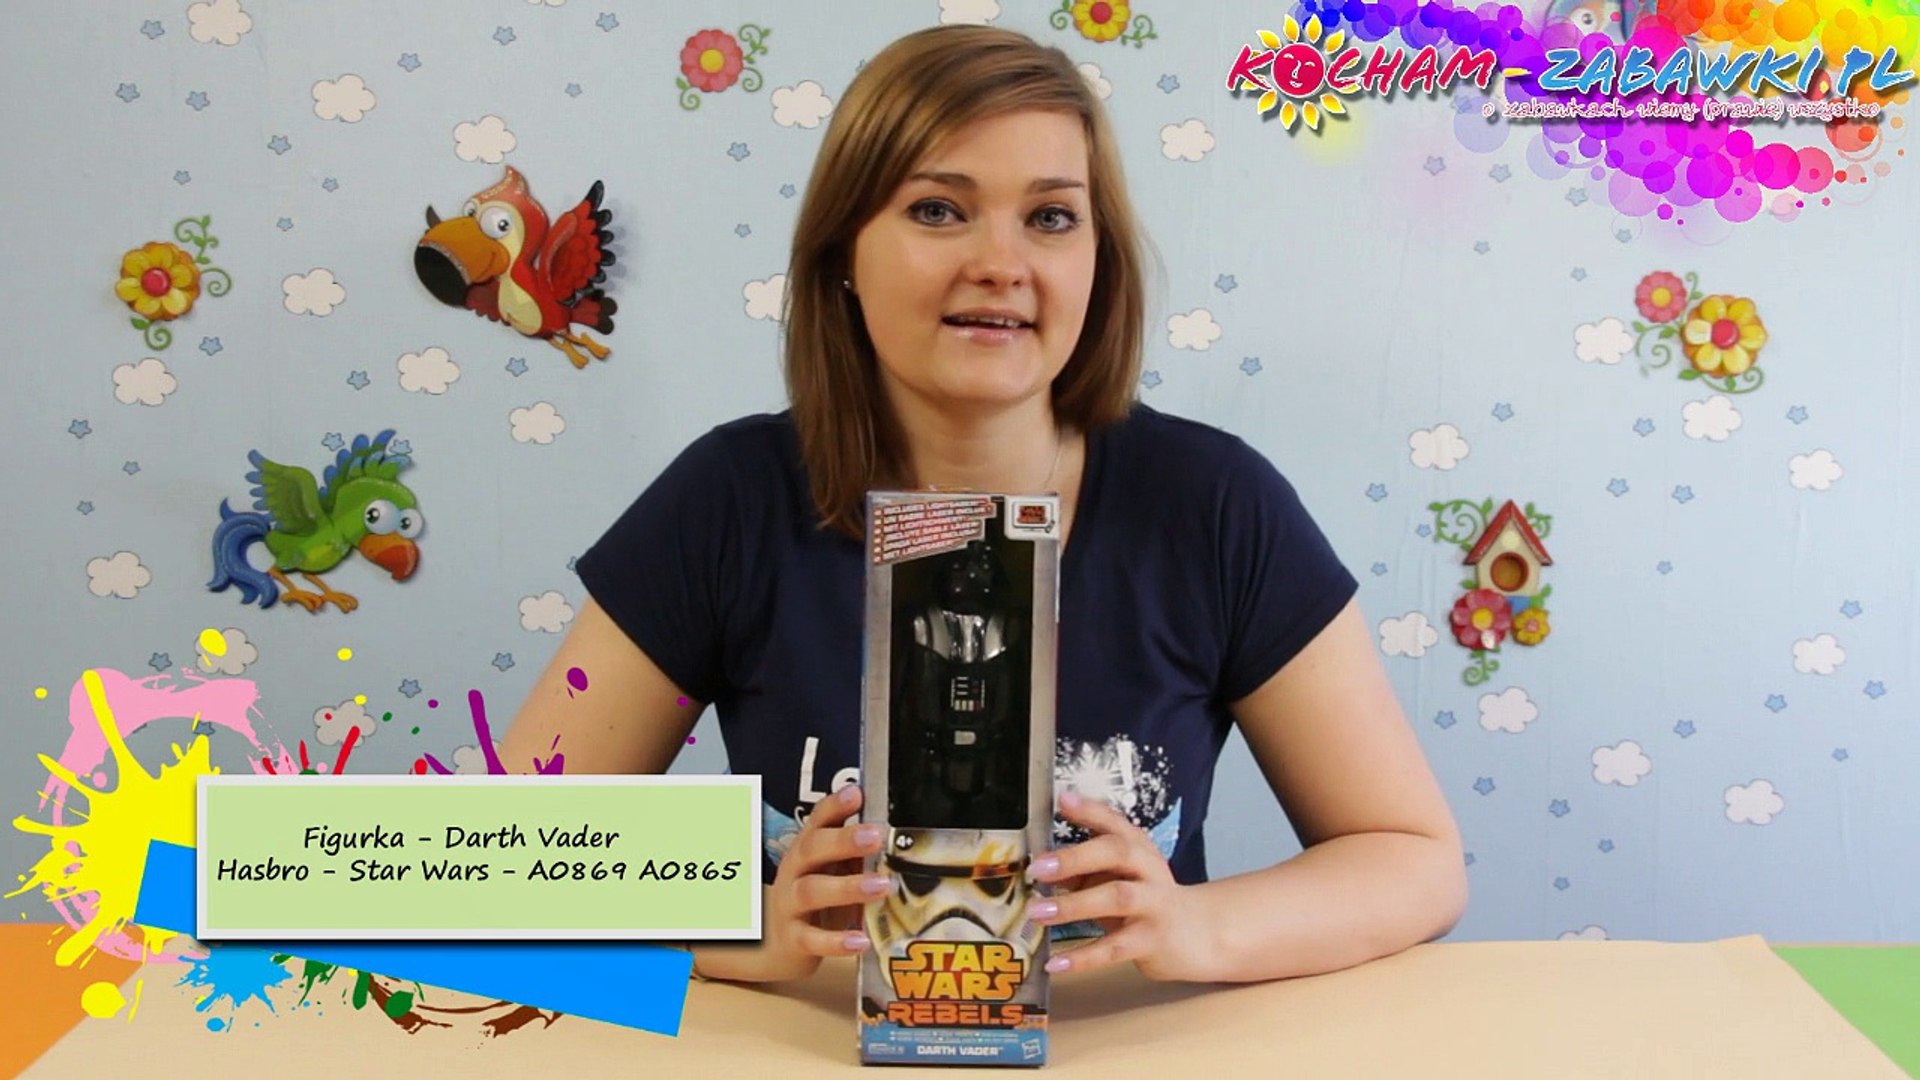 Darth Vader - Star Wars - Hasbro - A0869 A0865 - Recenzja - video  Dailymotion